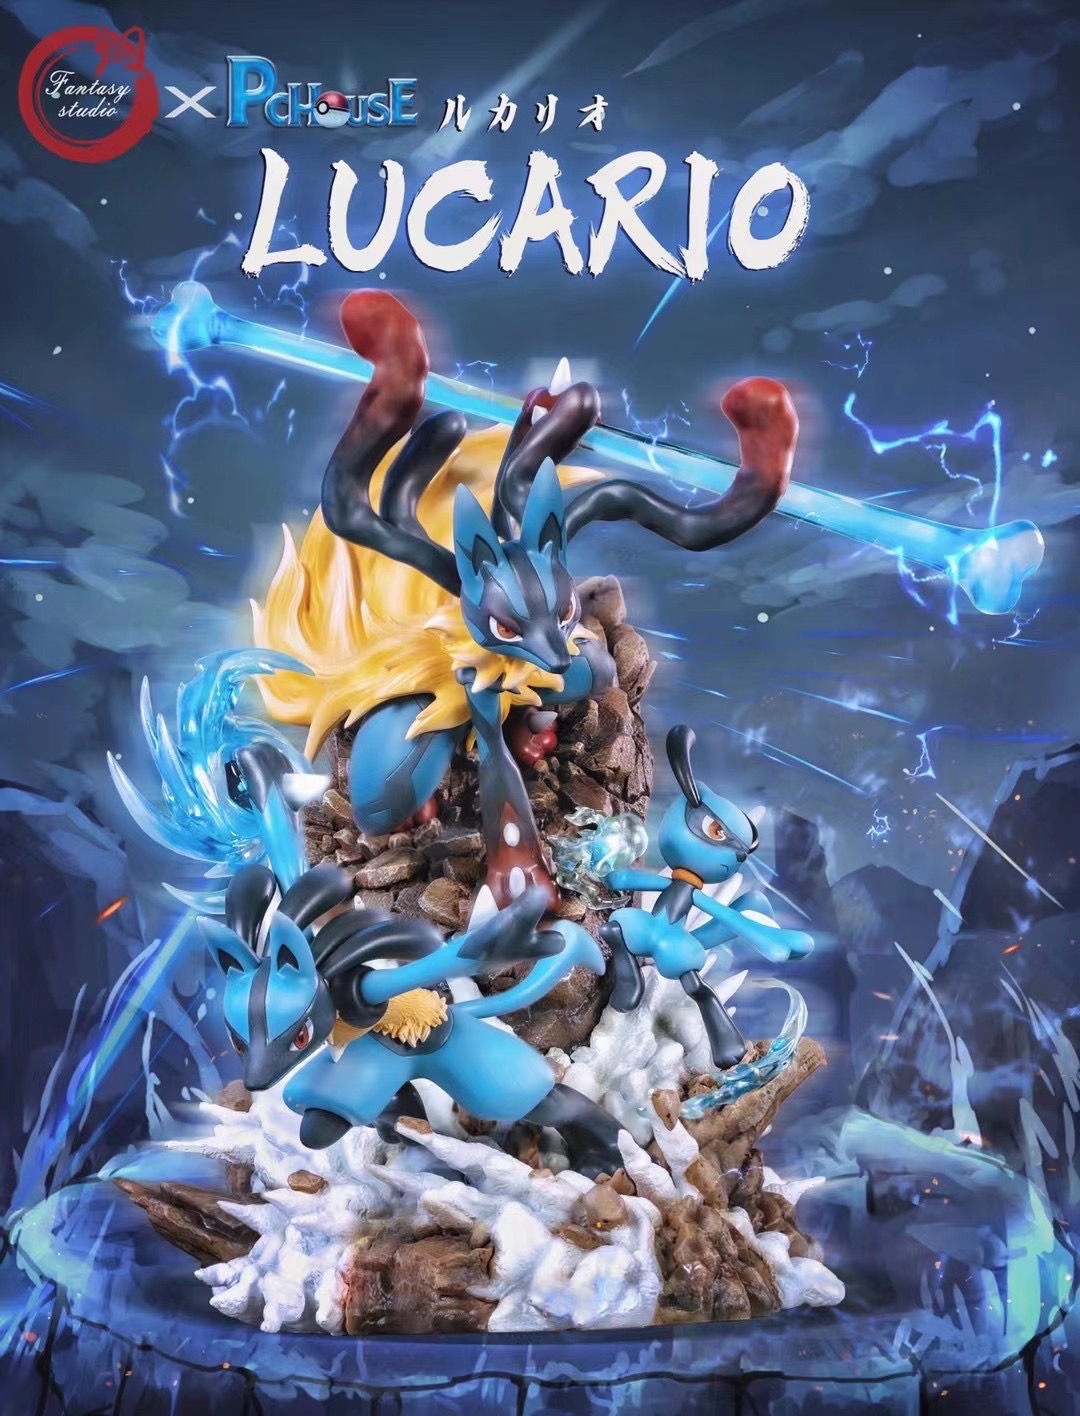 Lucario ลูคาริโอ by PC House x Fantasy Studio (มัดจำ) [[SOLD OUT]]